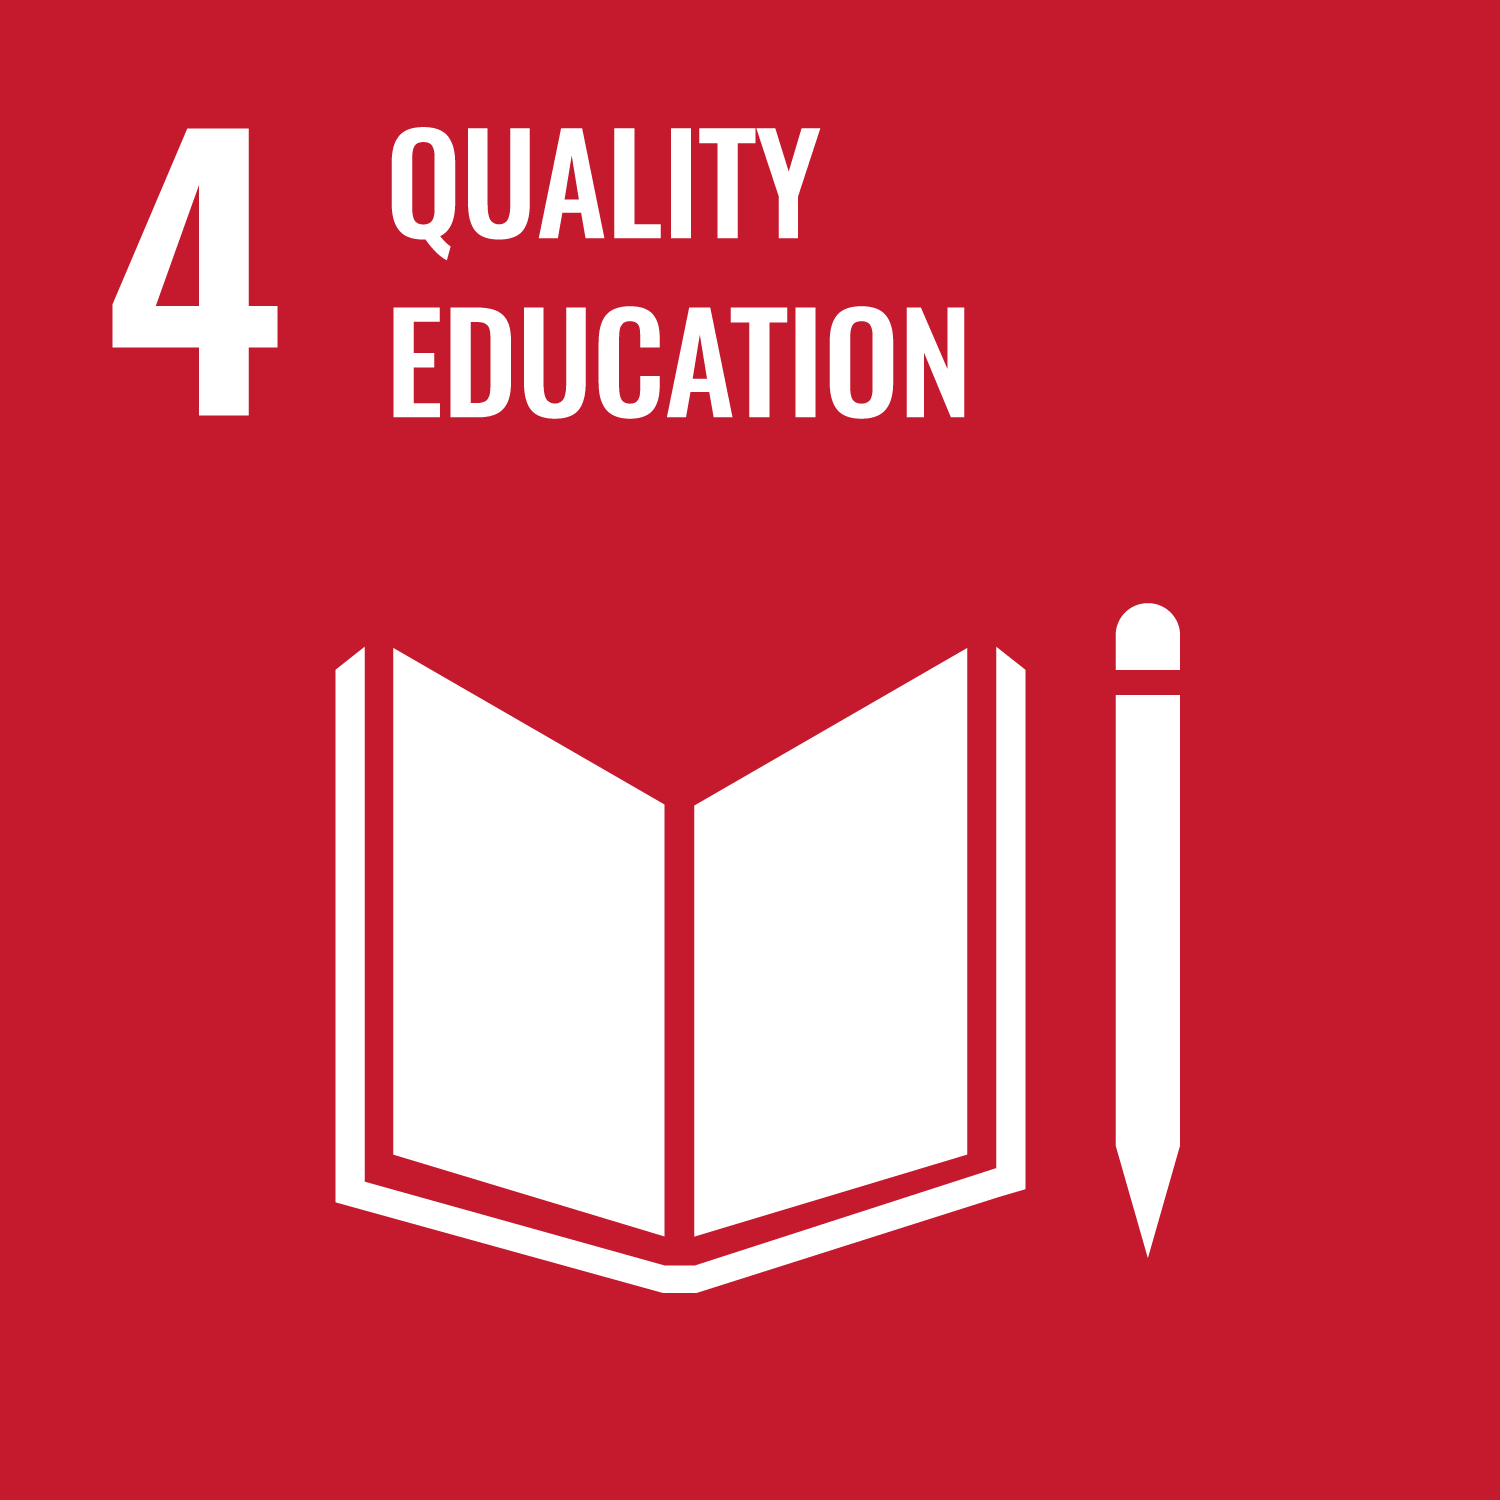 SDGs Goal 4 Quality Education cover image